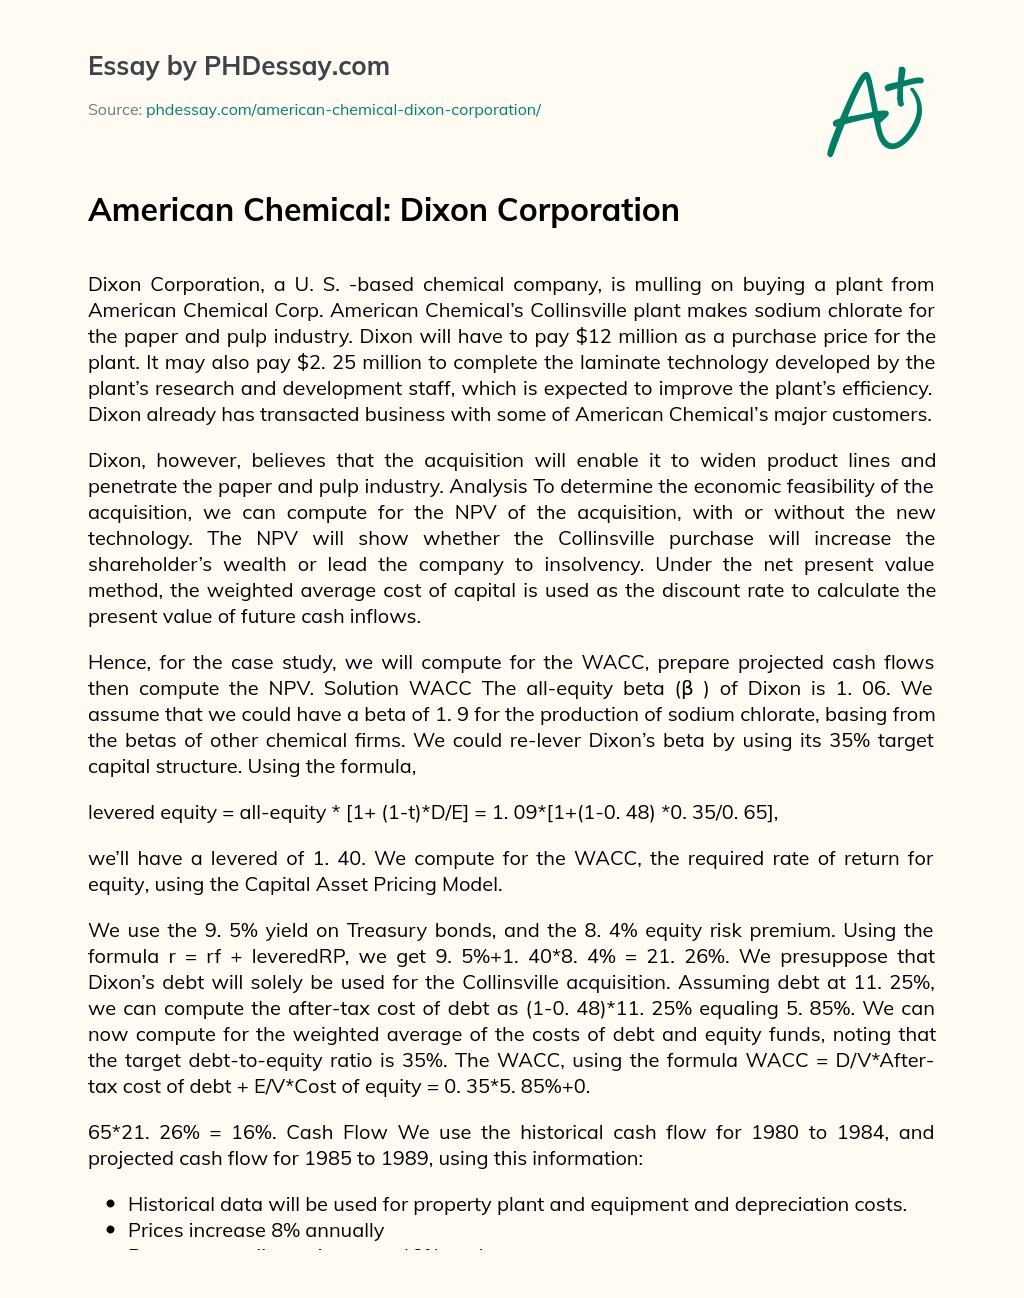 American Chemical: Dixon Corporation essay